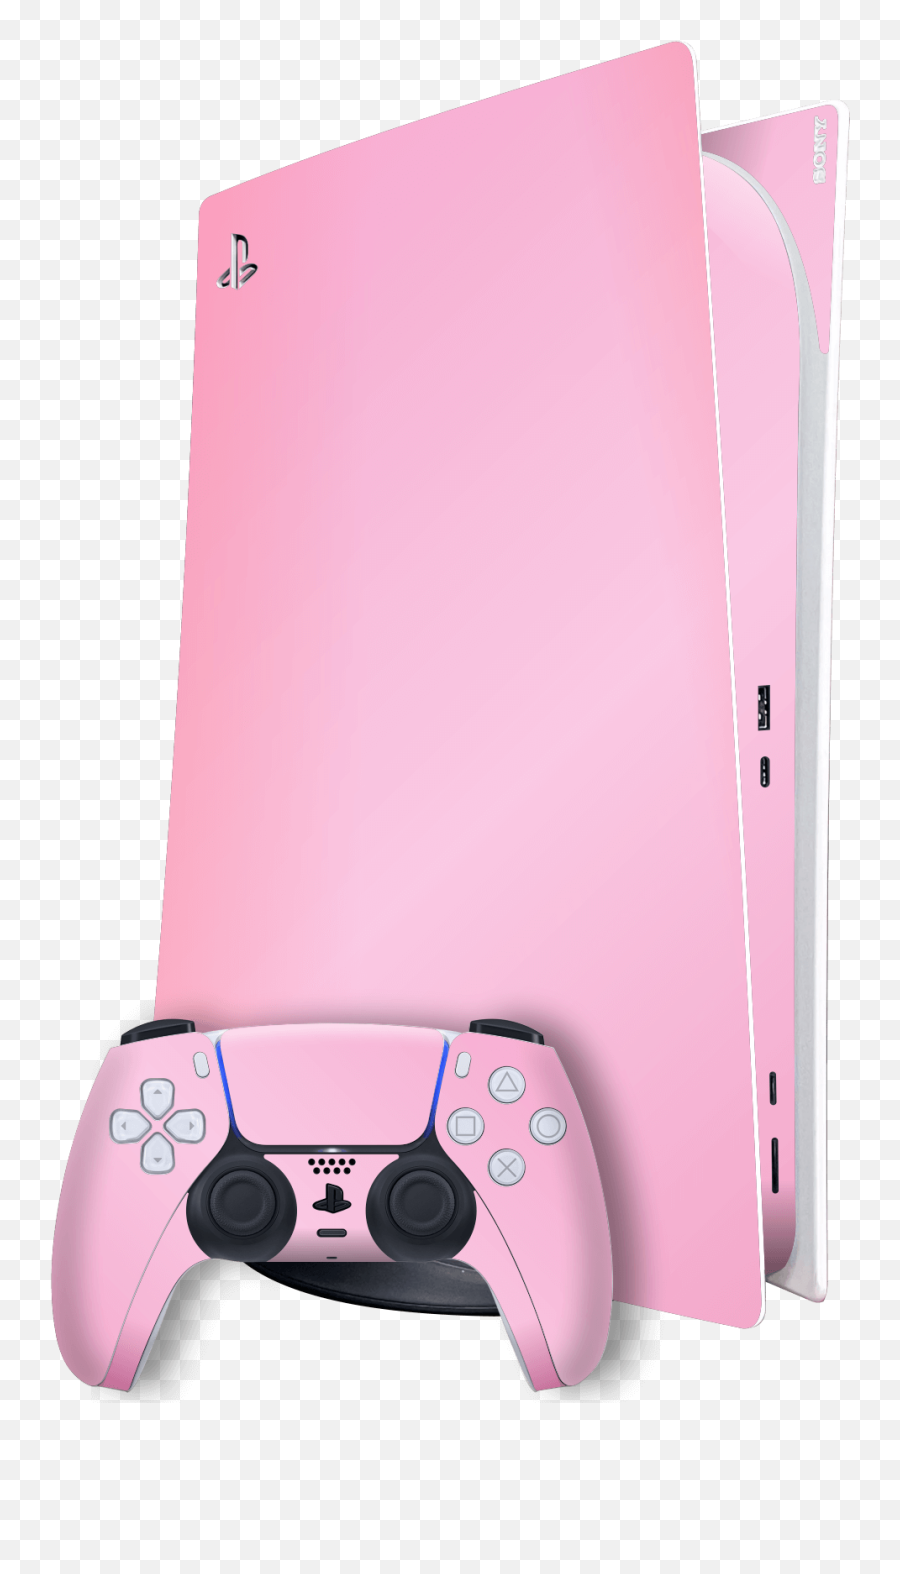 Playstation 5 Ps5 Digital Edition Pink Matt Skin Emoji,Video Game Conreoller Emoji